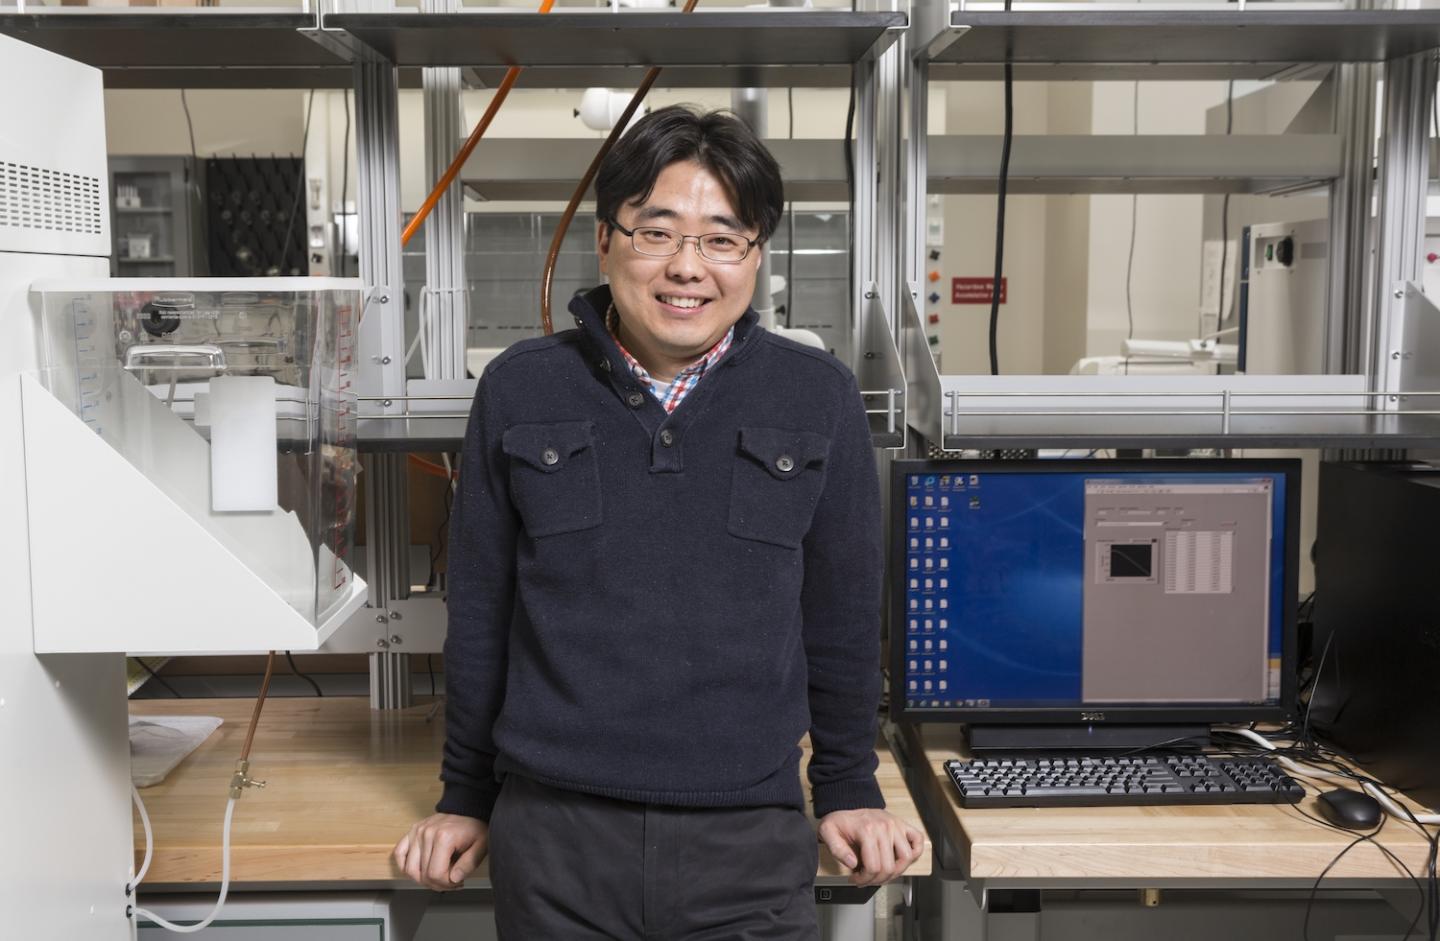 Binghamton University Electrical and Computer Science Assistant Professor Seokheun Choi